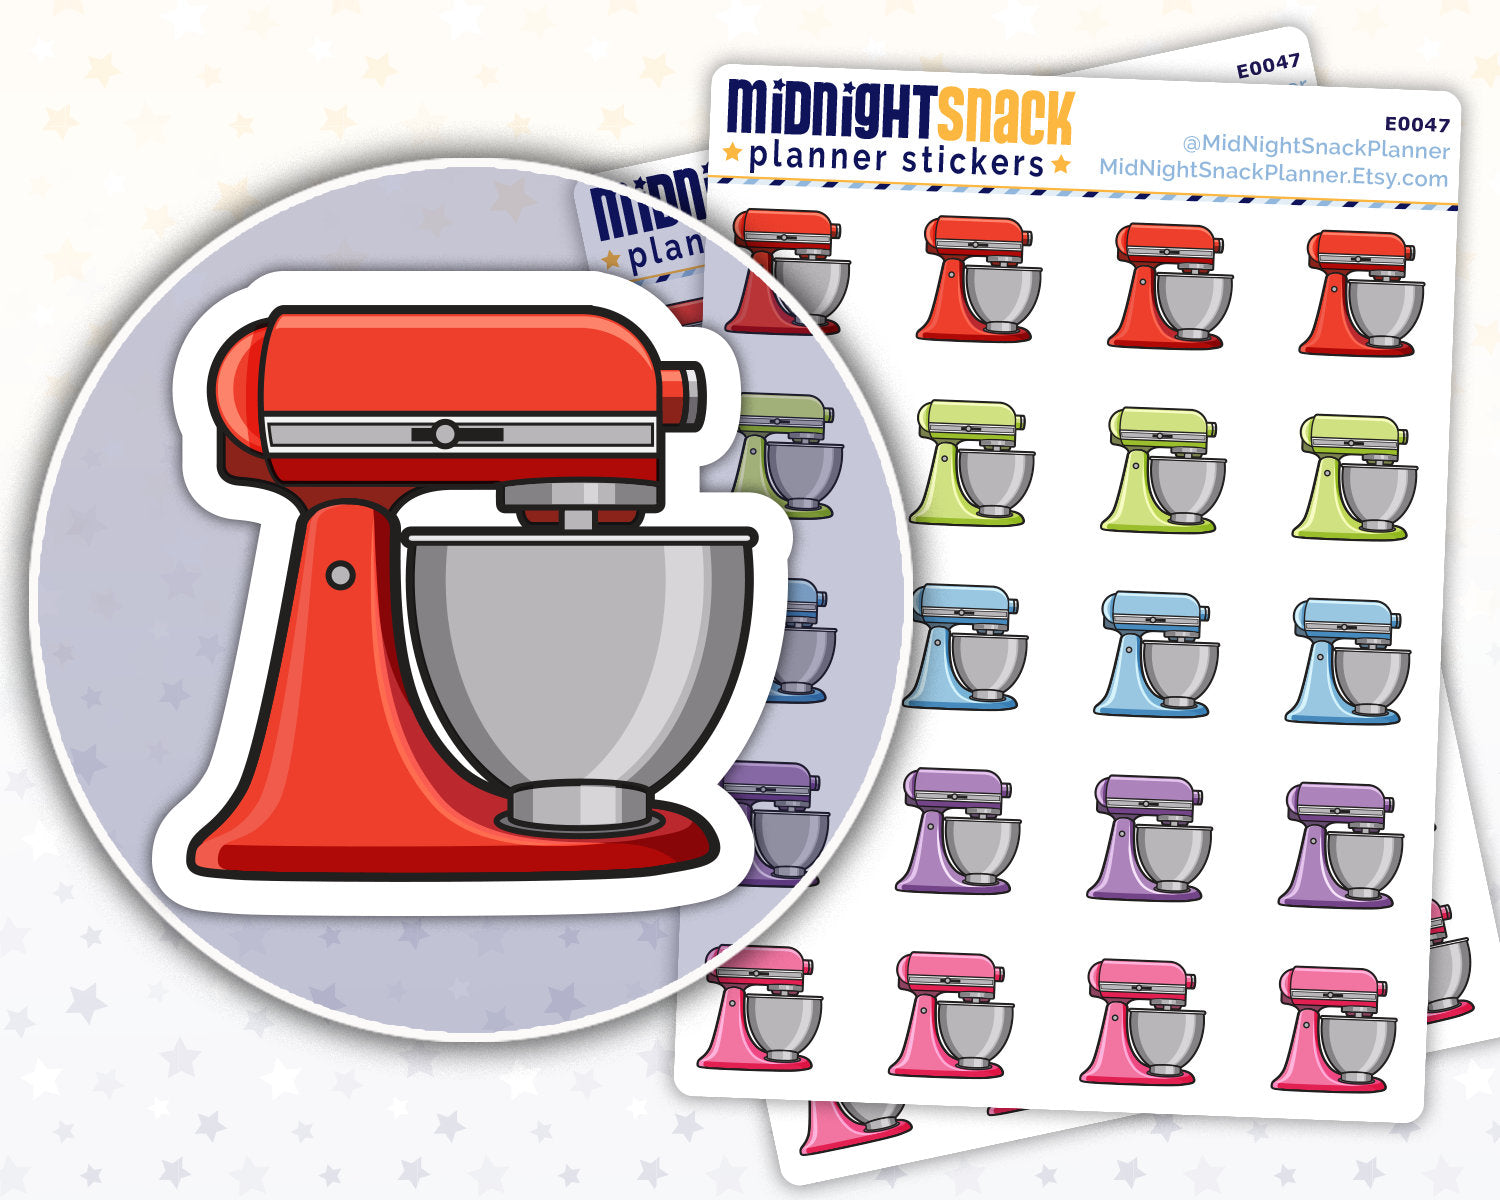 Stand Mixer Icon: Baking Planner Stickers Midnight Snack Planner